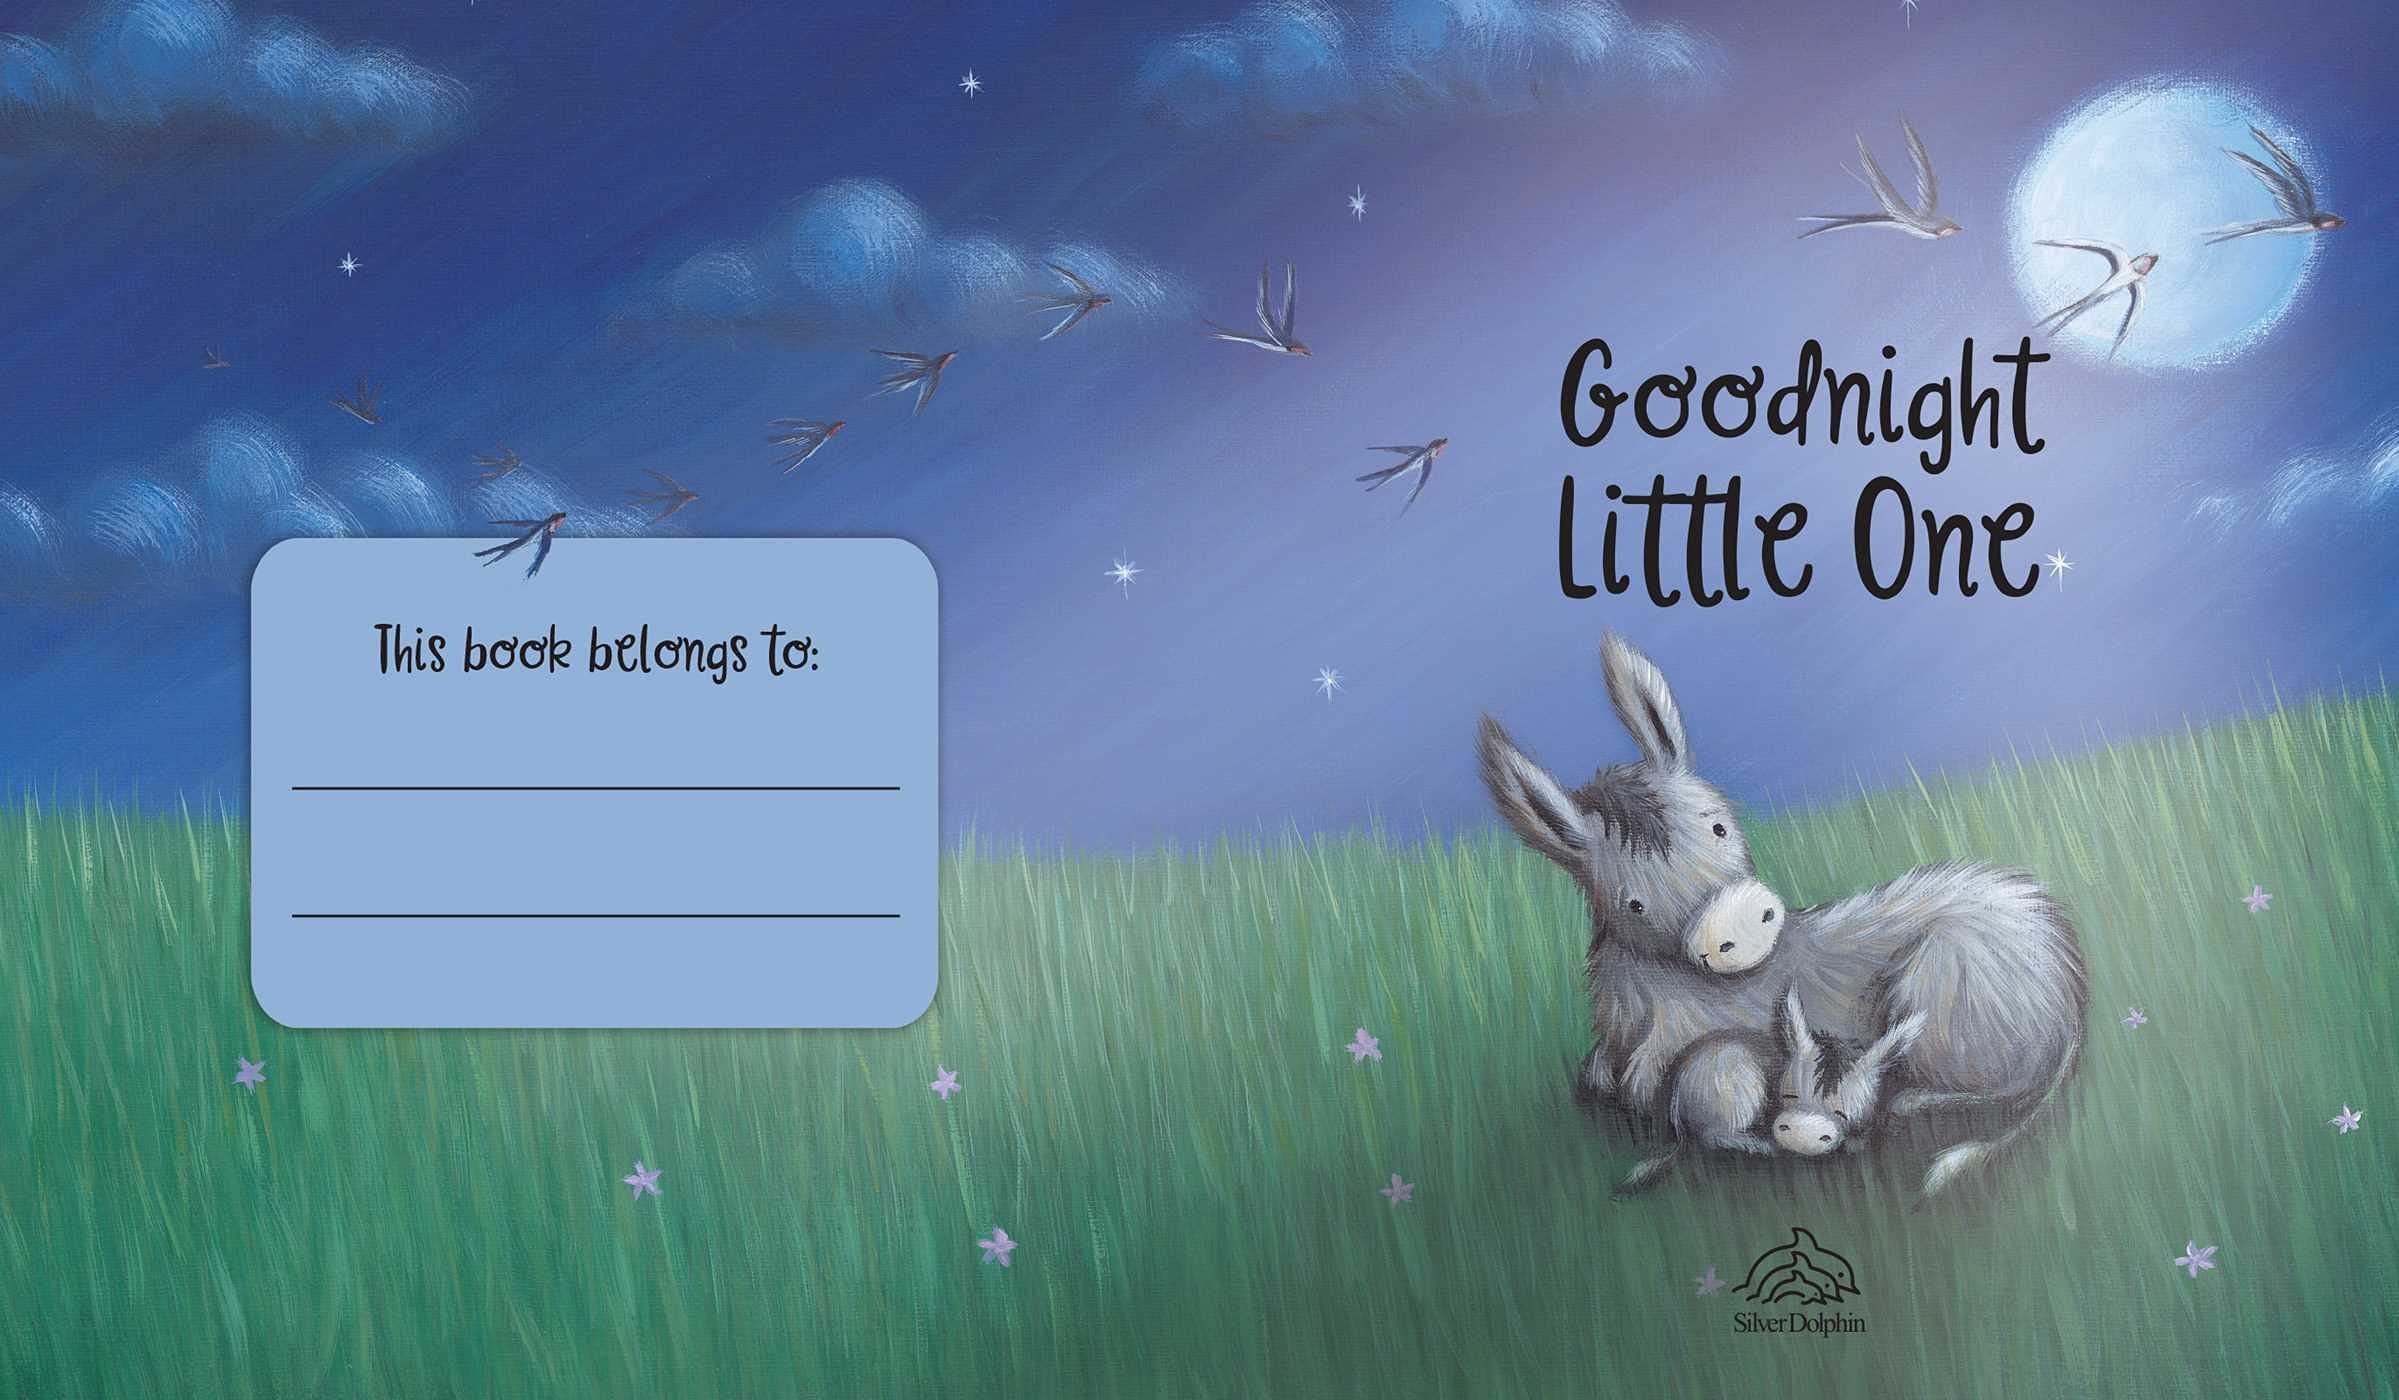 Truyện đọc Tiếng Anh - Goodnight Little One